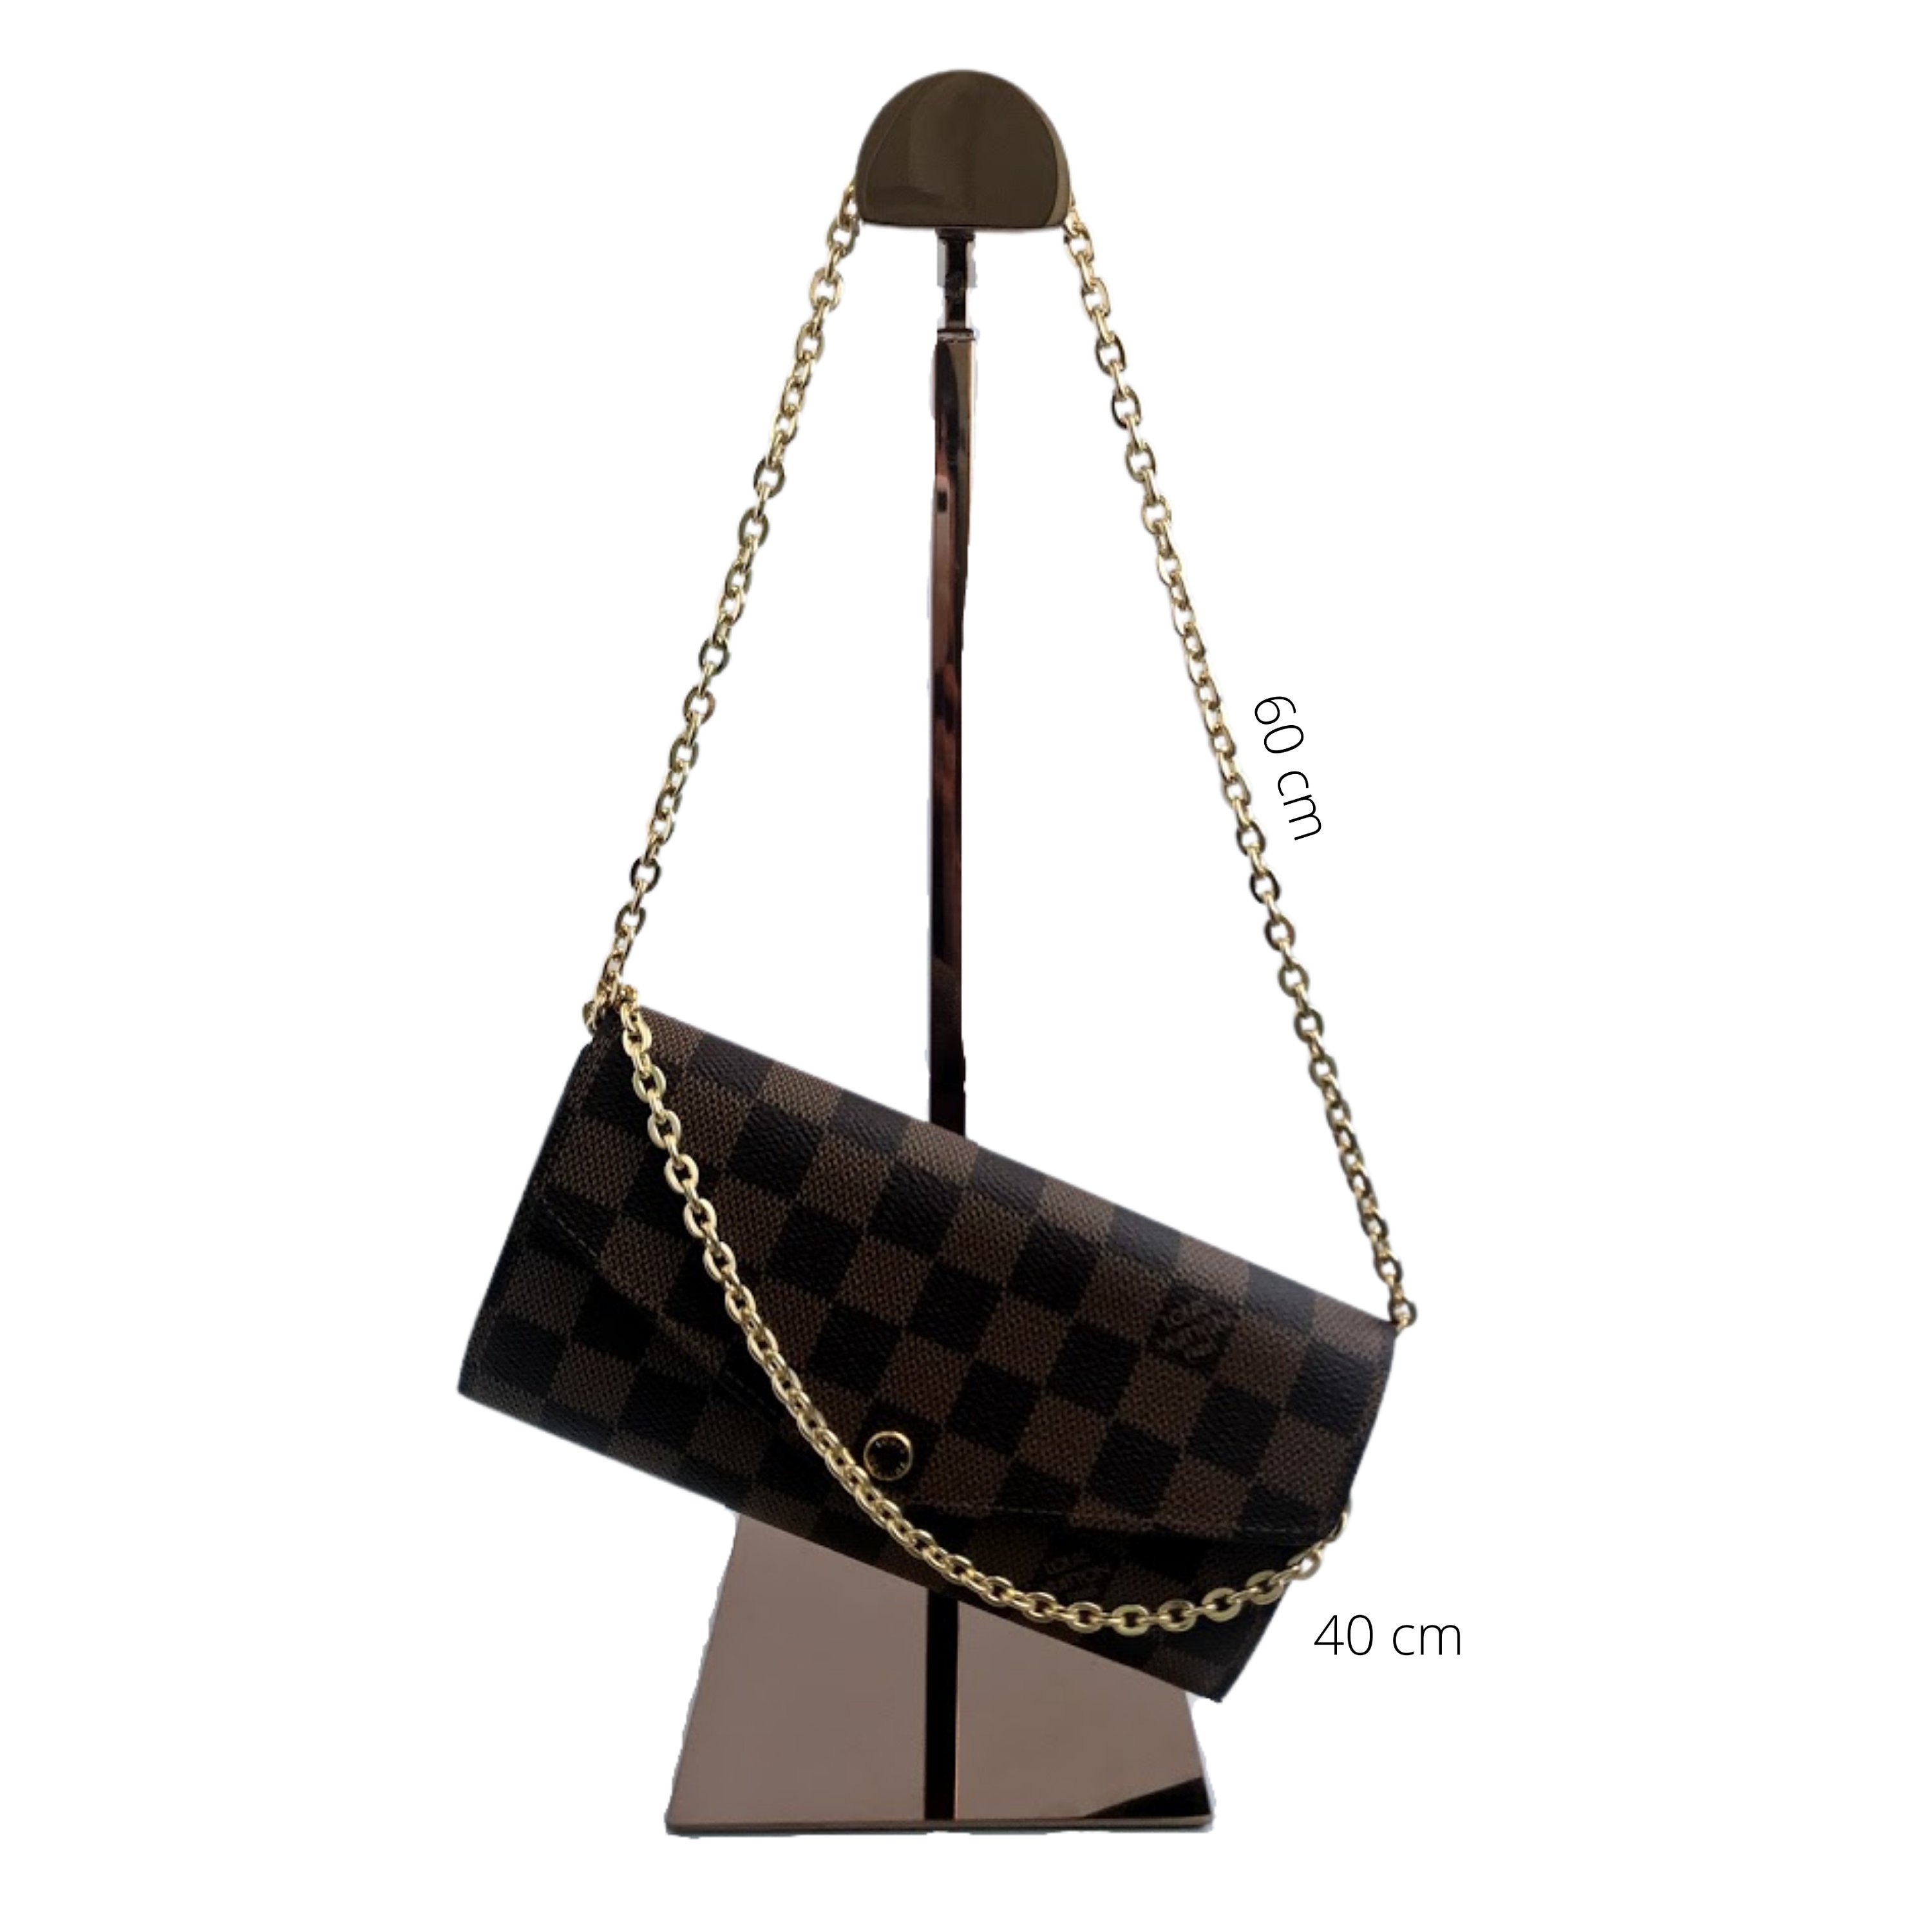 Purse conversion kit-Emily wallet for LV Sarah bag, chain accessories,  organizer conversion shoulder bag Y001-brown